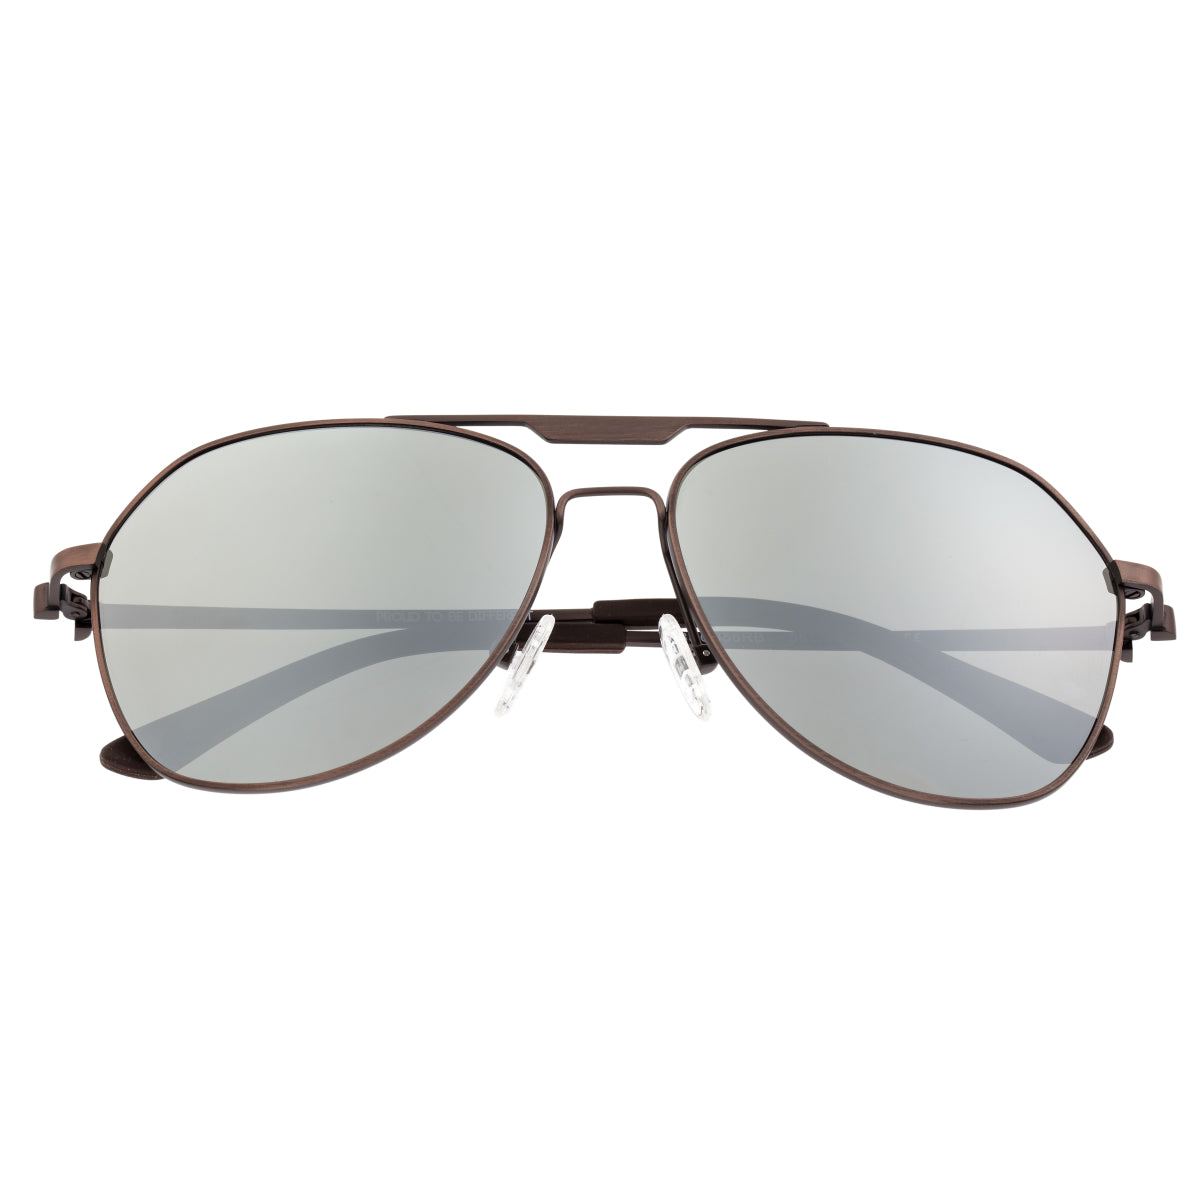 Breed Mount Titanium Polarized Sunglasses - Brown/Silver - BSG056RB